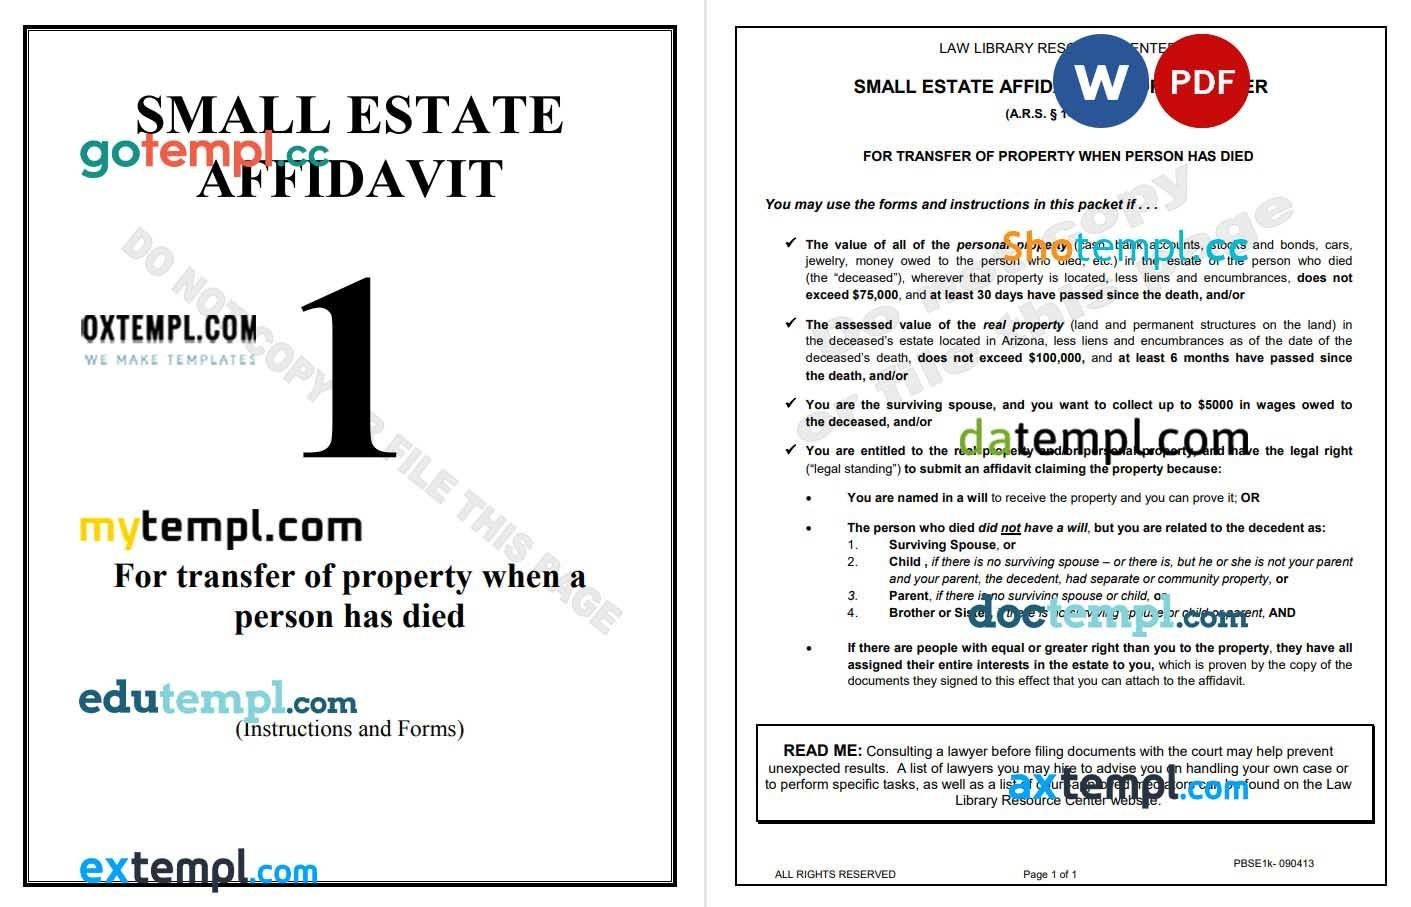 Arizona Small Estate Affidavit Form example, fully editable